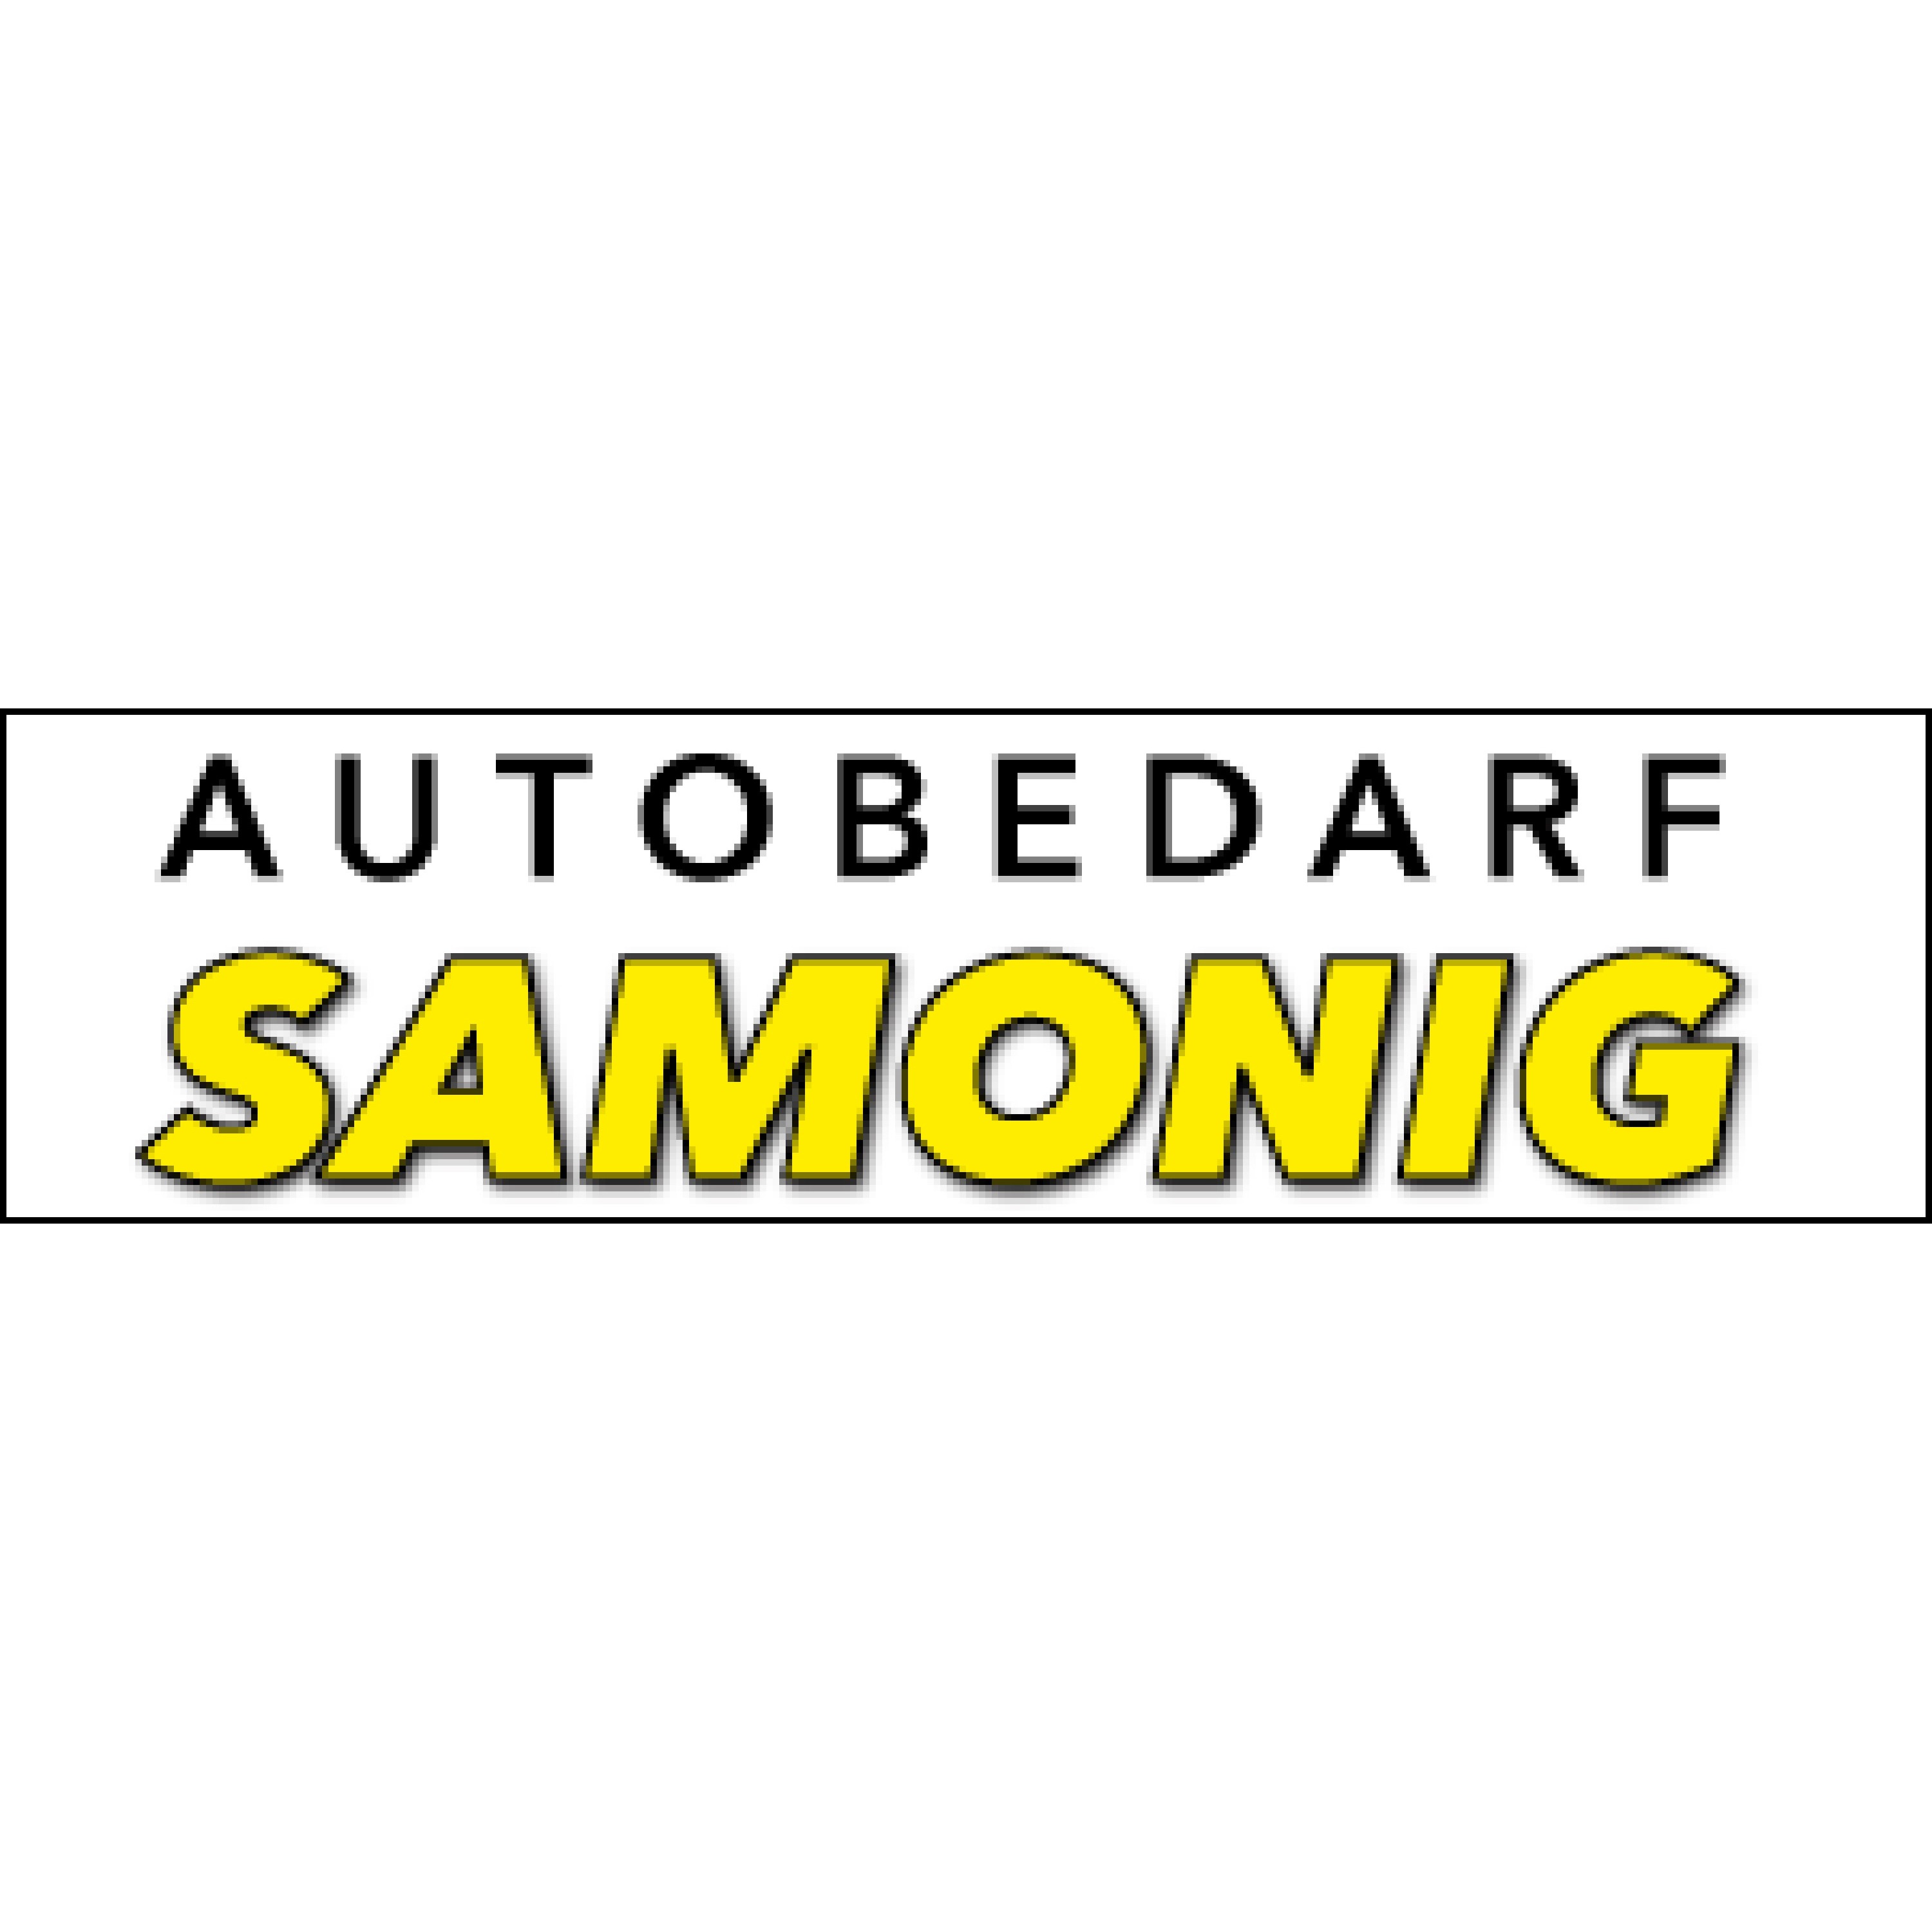 Autobedarf Samonig - Auto Repair Shop - Villach - 04242 42250 Austria | ShowMeLocal.com